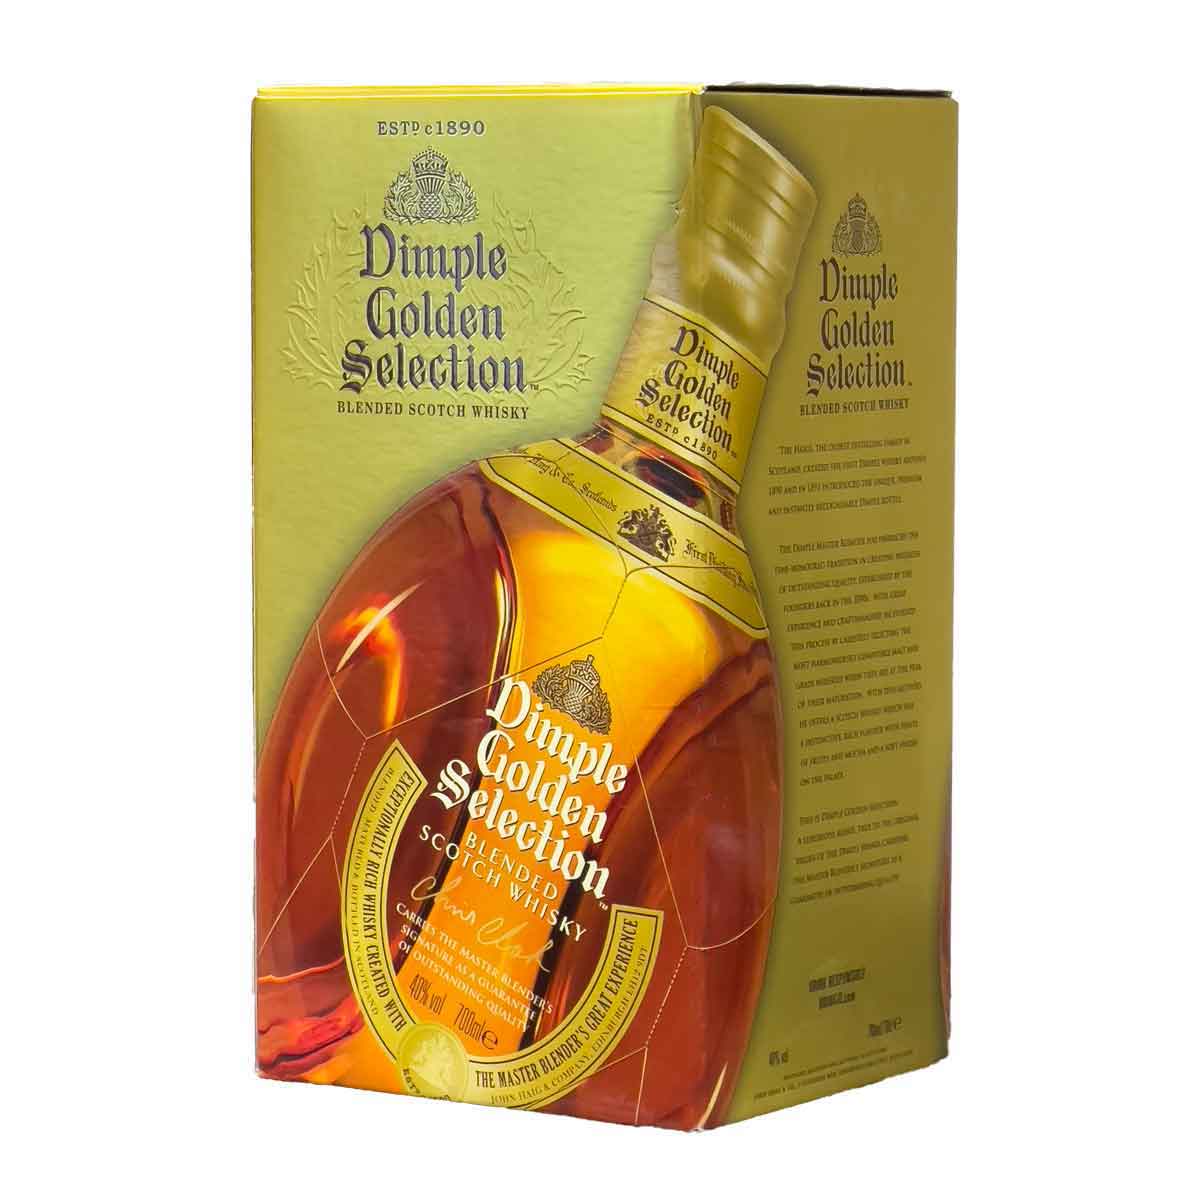 Dimple Golden Selection Blended 40% | Whisky Potyka Getränke-Bringdienst (0,7l) Scotch